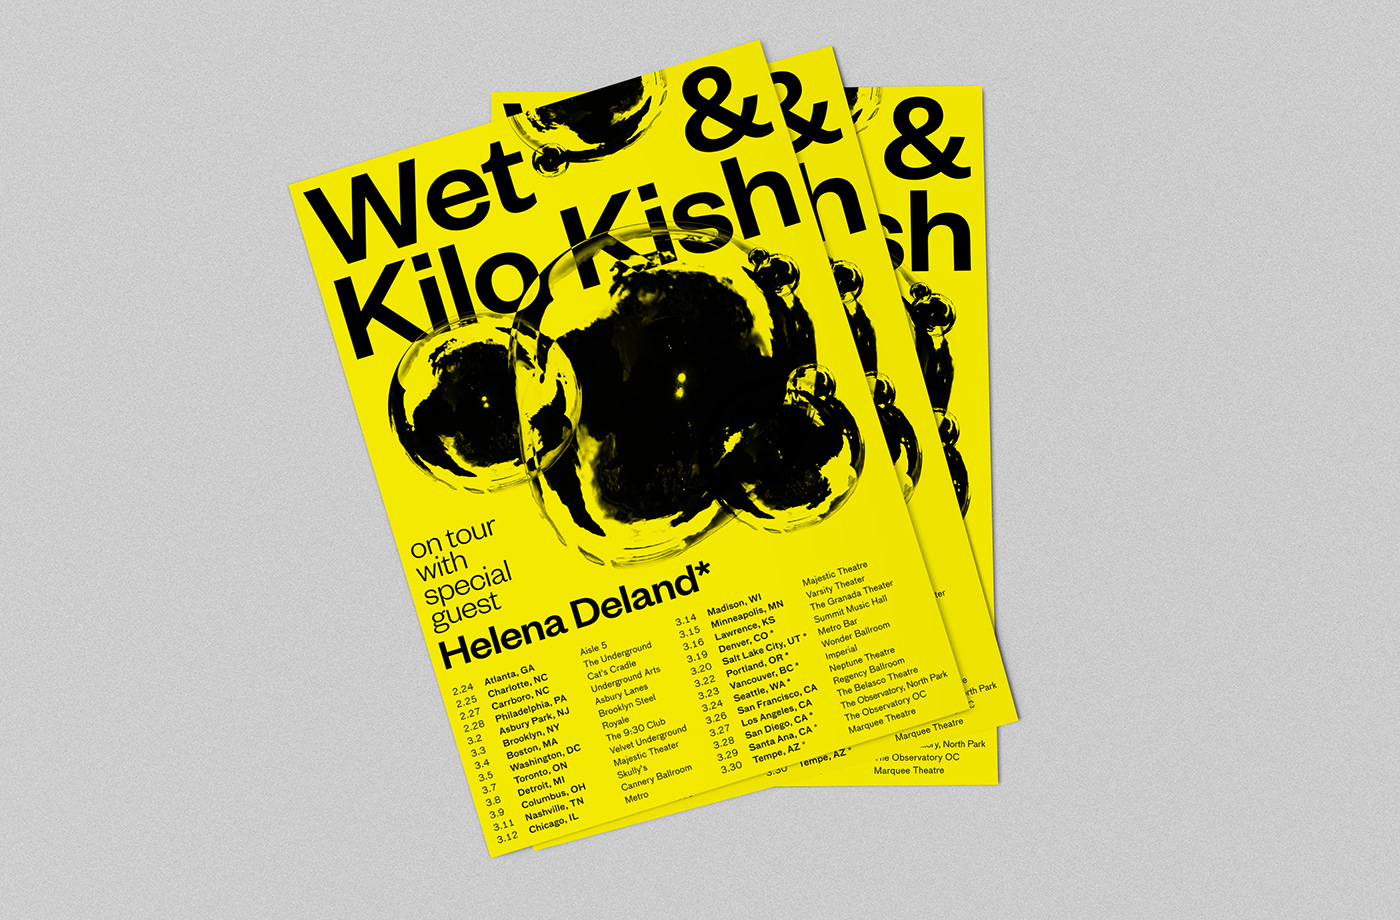 kilo kish Mothe metagrafik maxim dosca cover cover design music vynil Cover Art Album